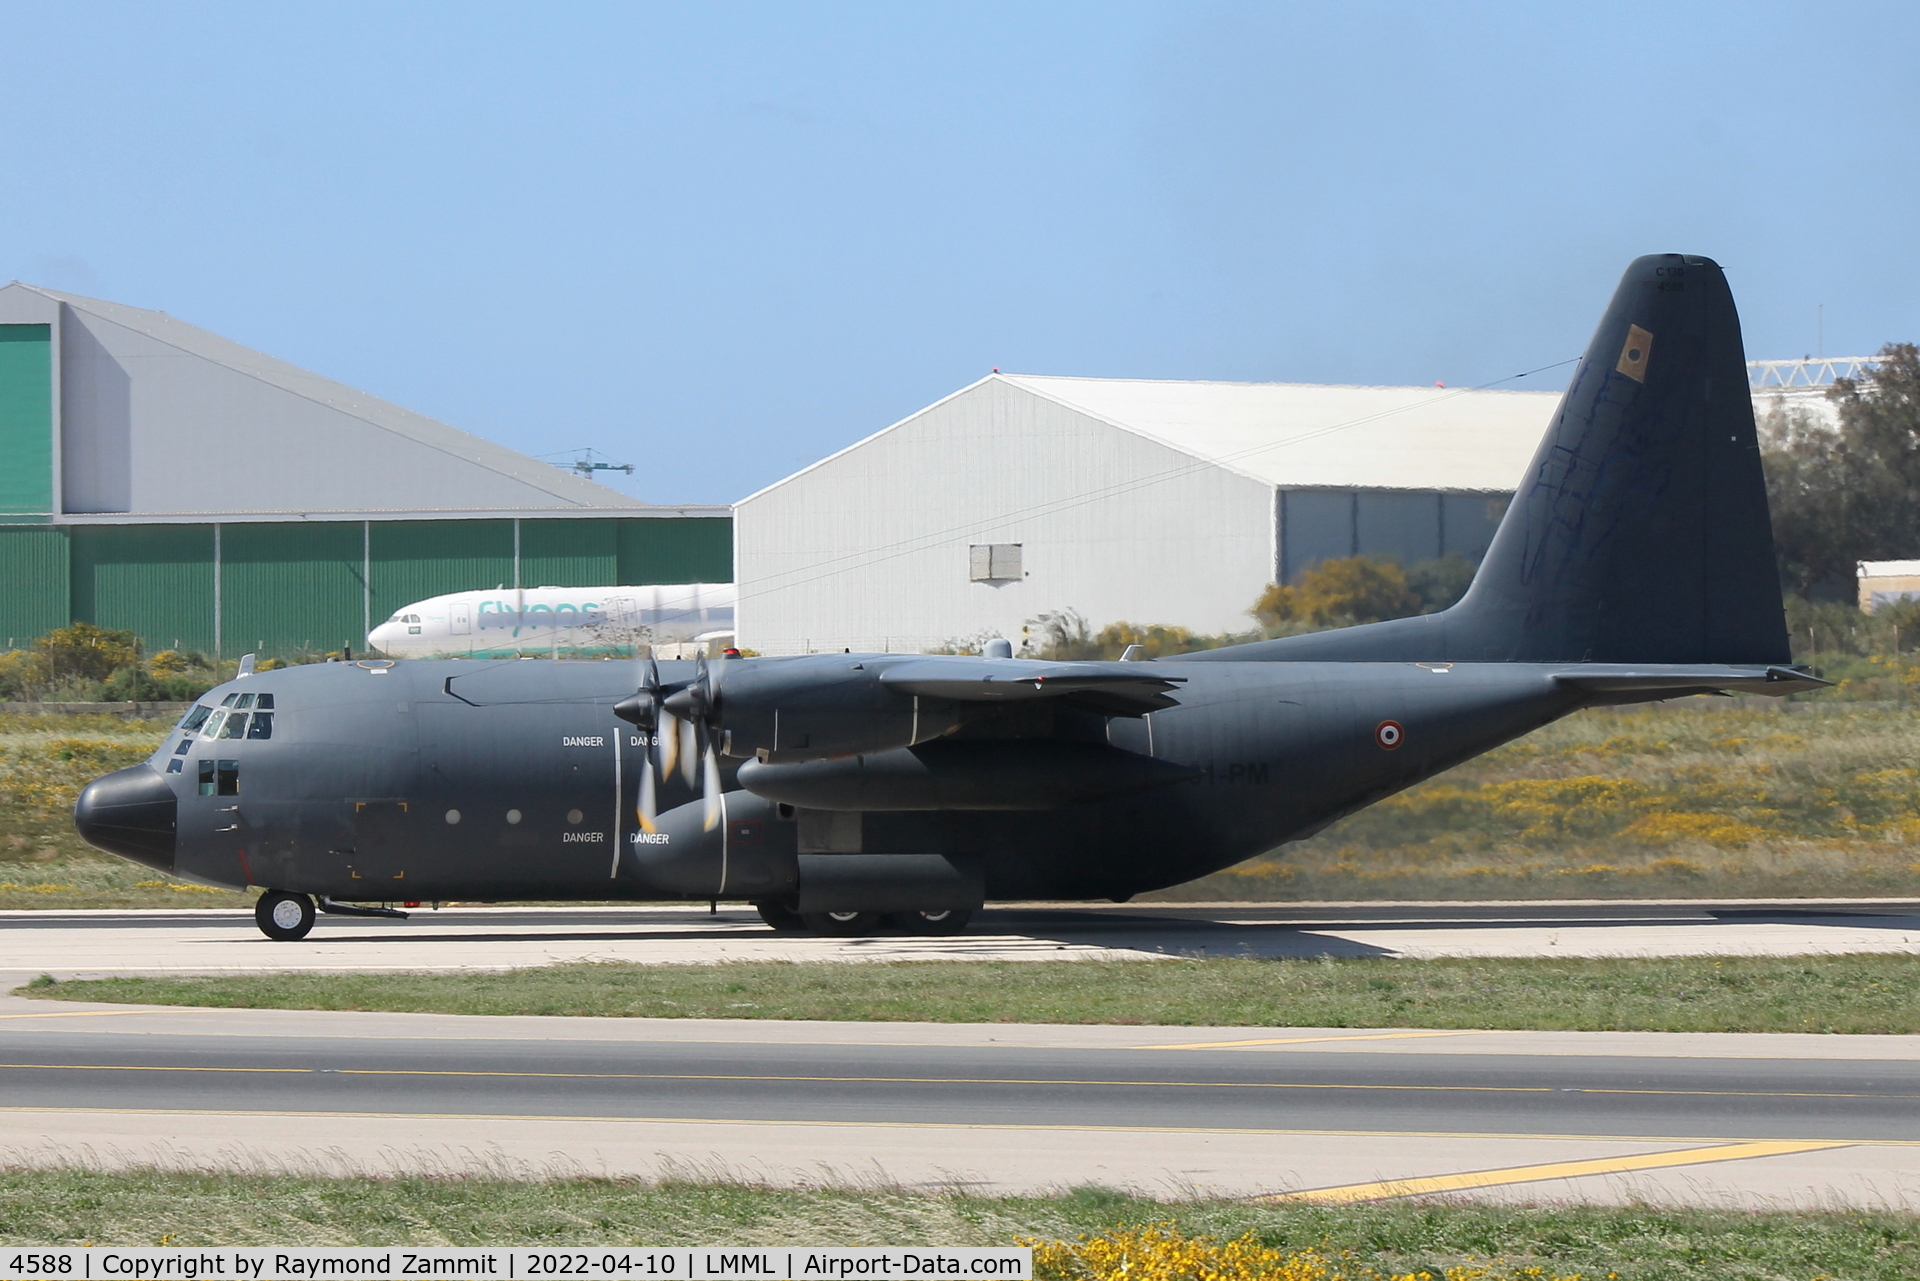 4588, 1975 Lockheed C-130H Hercules C/N 382-4588, Lockheed C-130H Hercules 4588/61-PM French Air Force